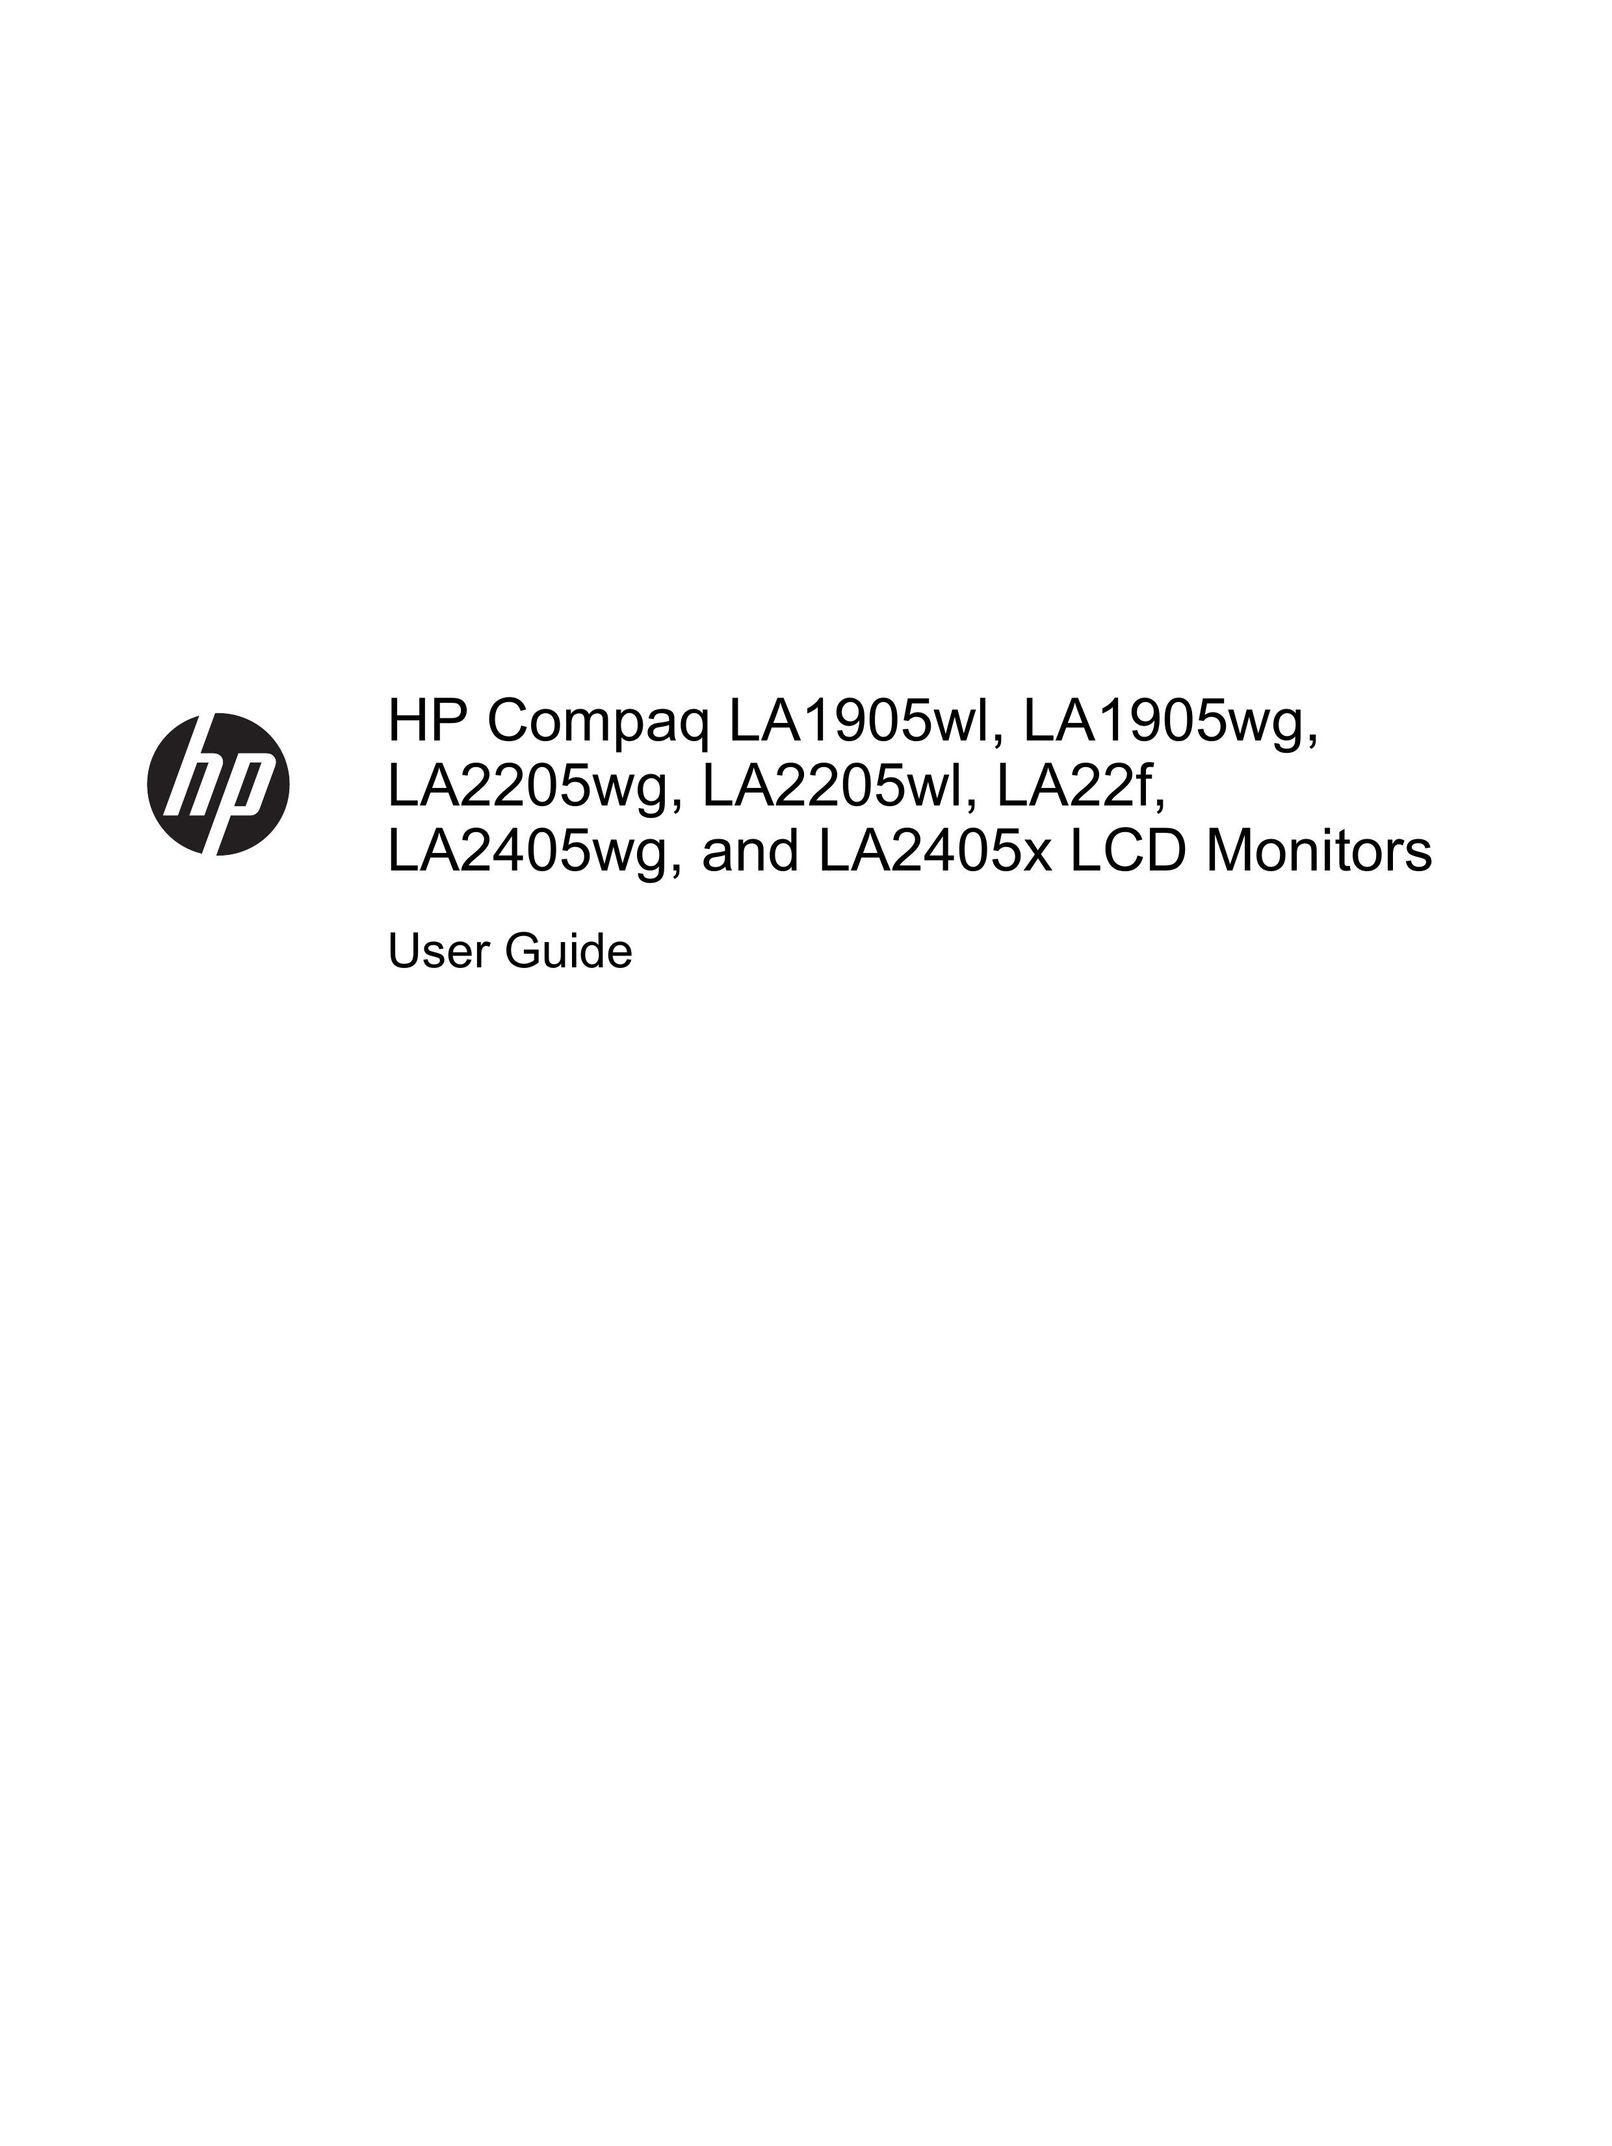 HP (Hewlett-Packard) LA1905WG Car Video System User Manual